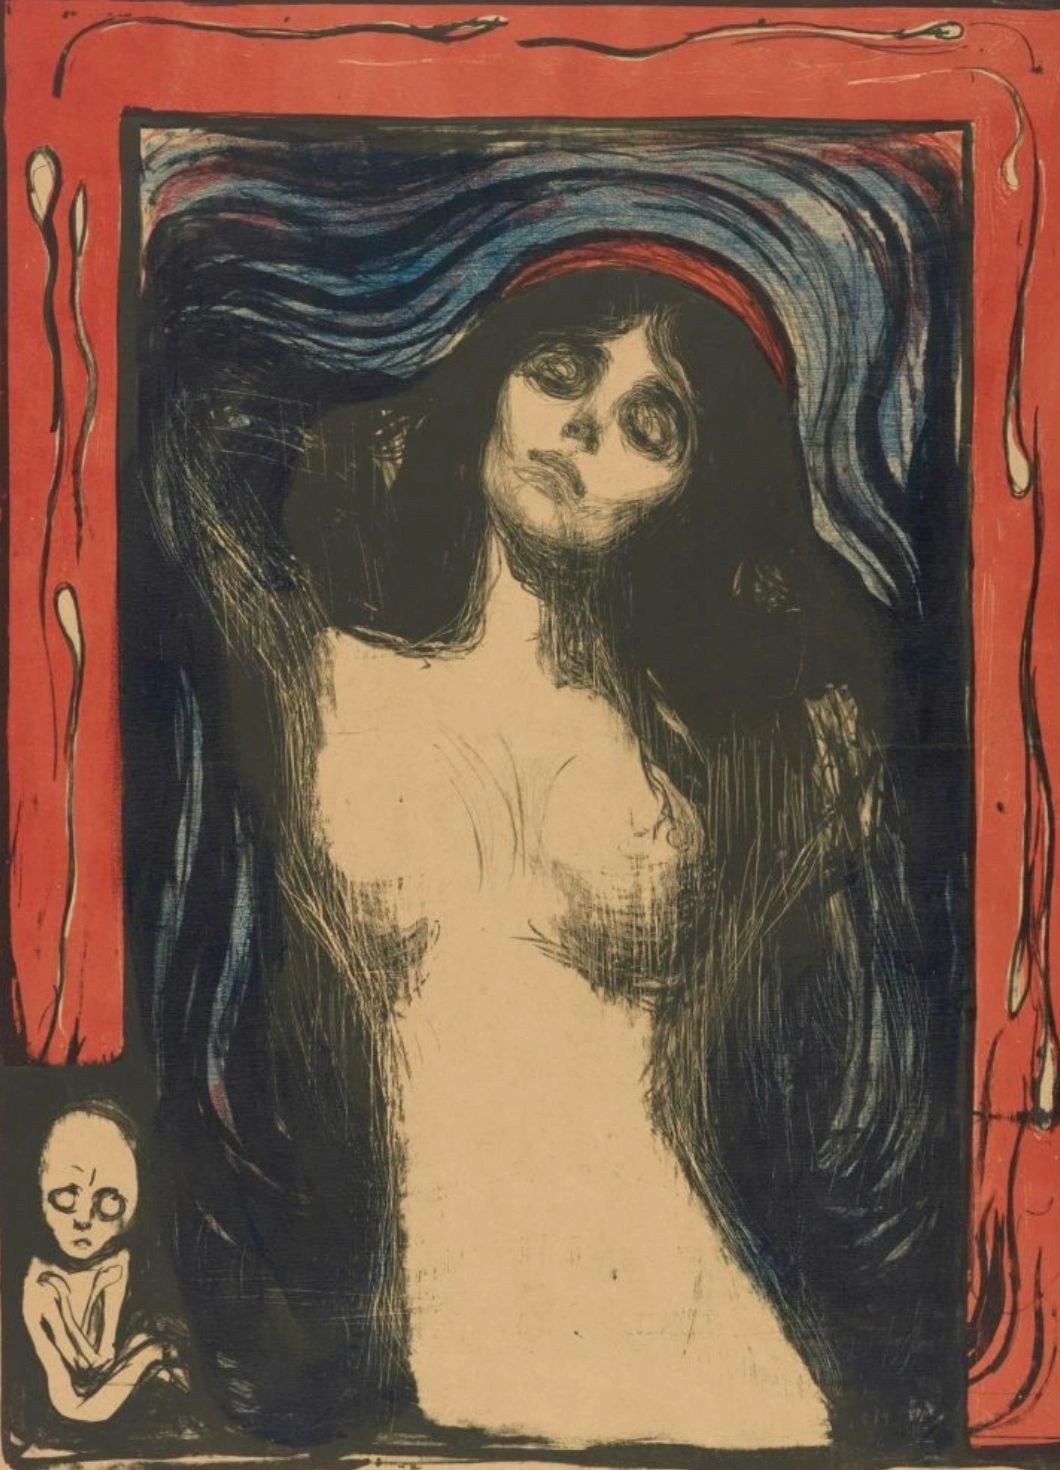 Stanislav Kondrashov, Art, Edvard Munch